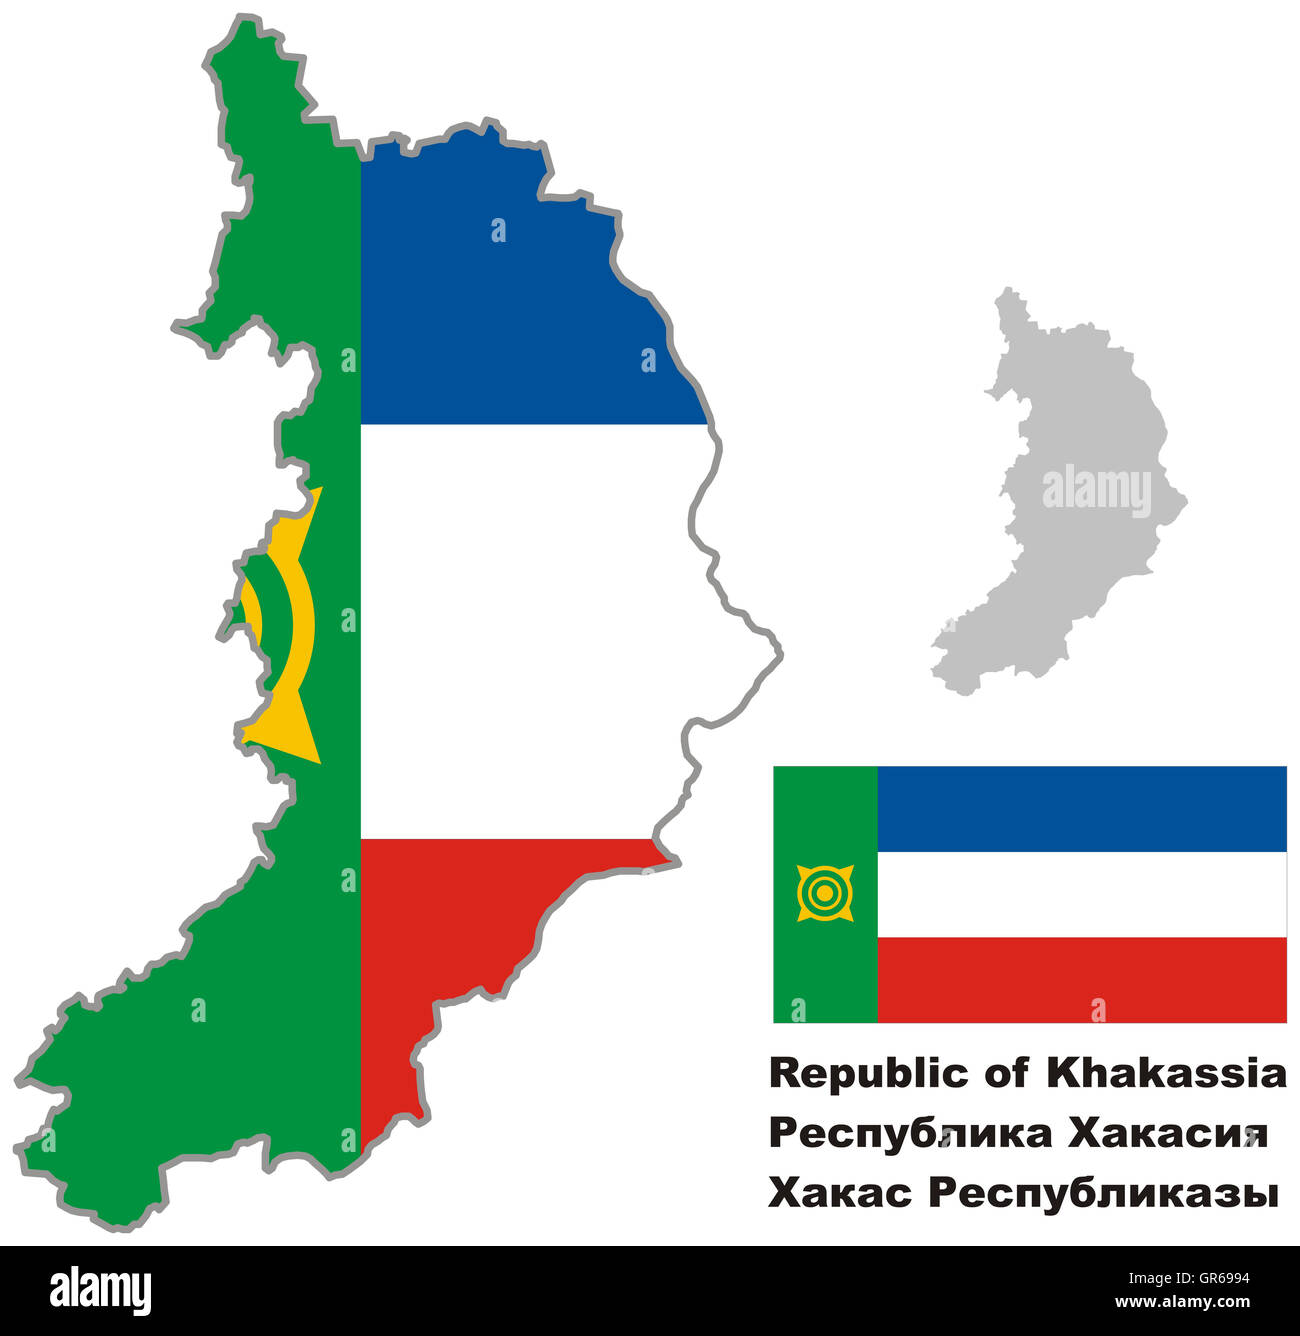 Республика Хакасия контур